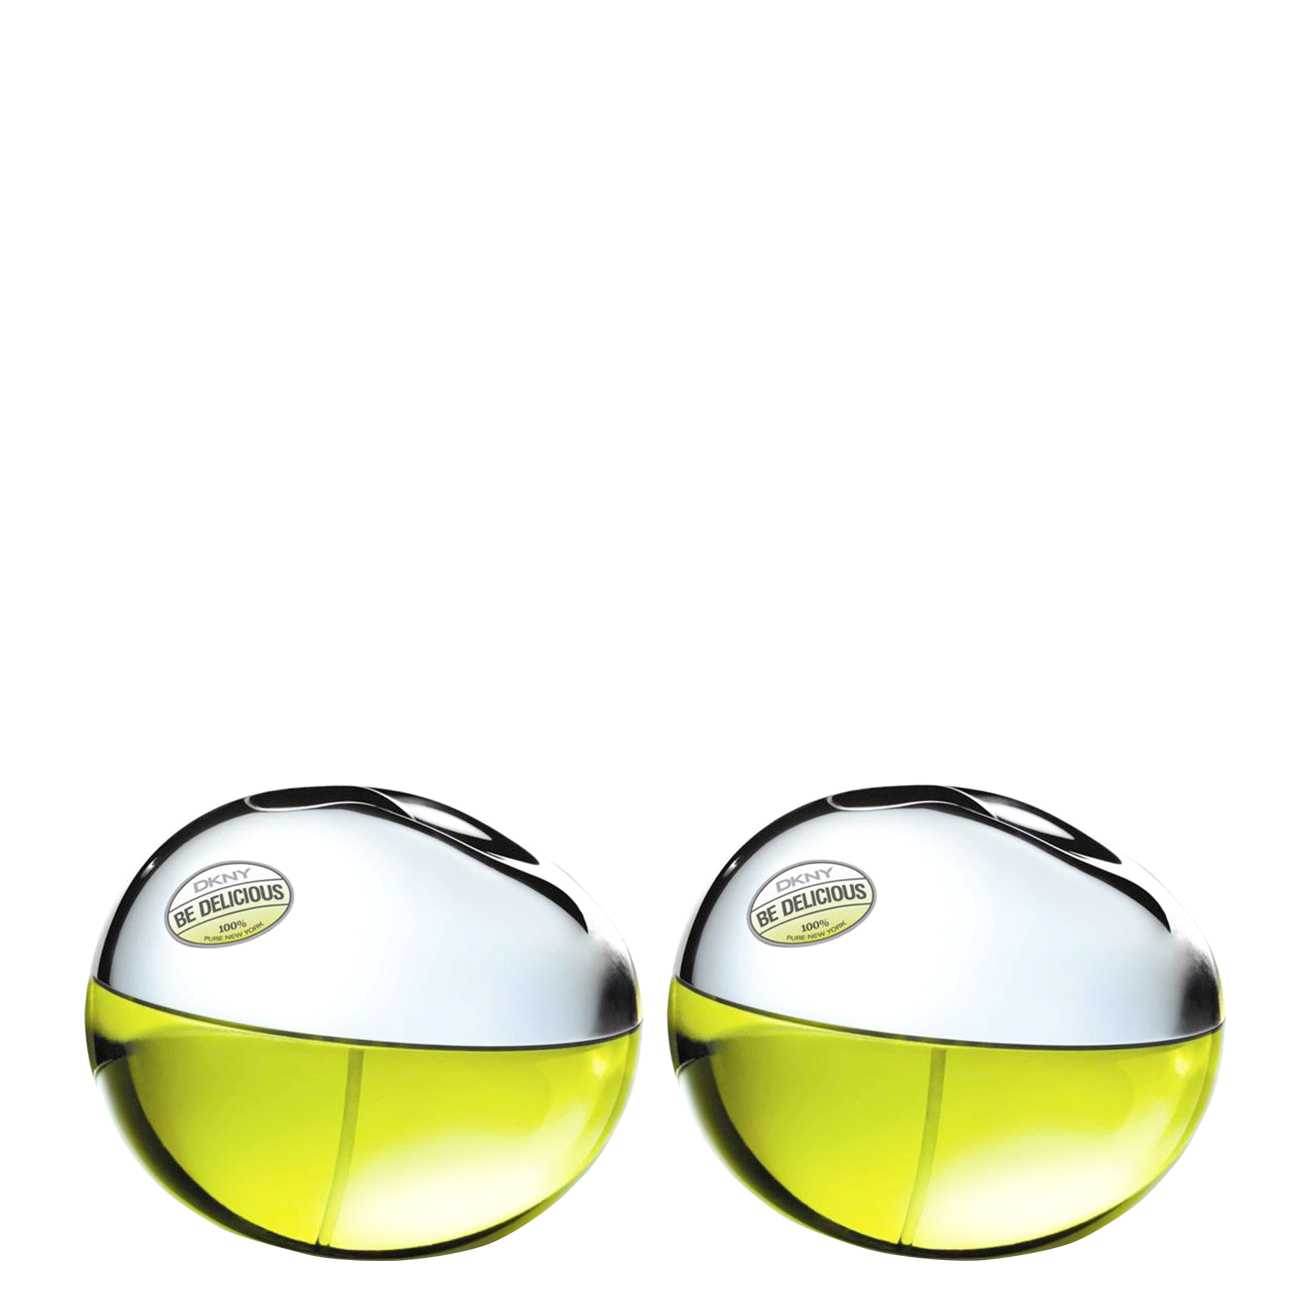 Set parfumuri Donna Karan BE DELICIOUS 60 ML 60ml cu comanda online